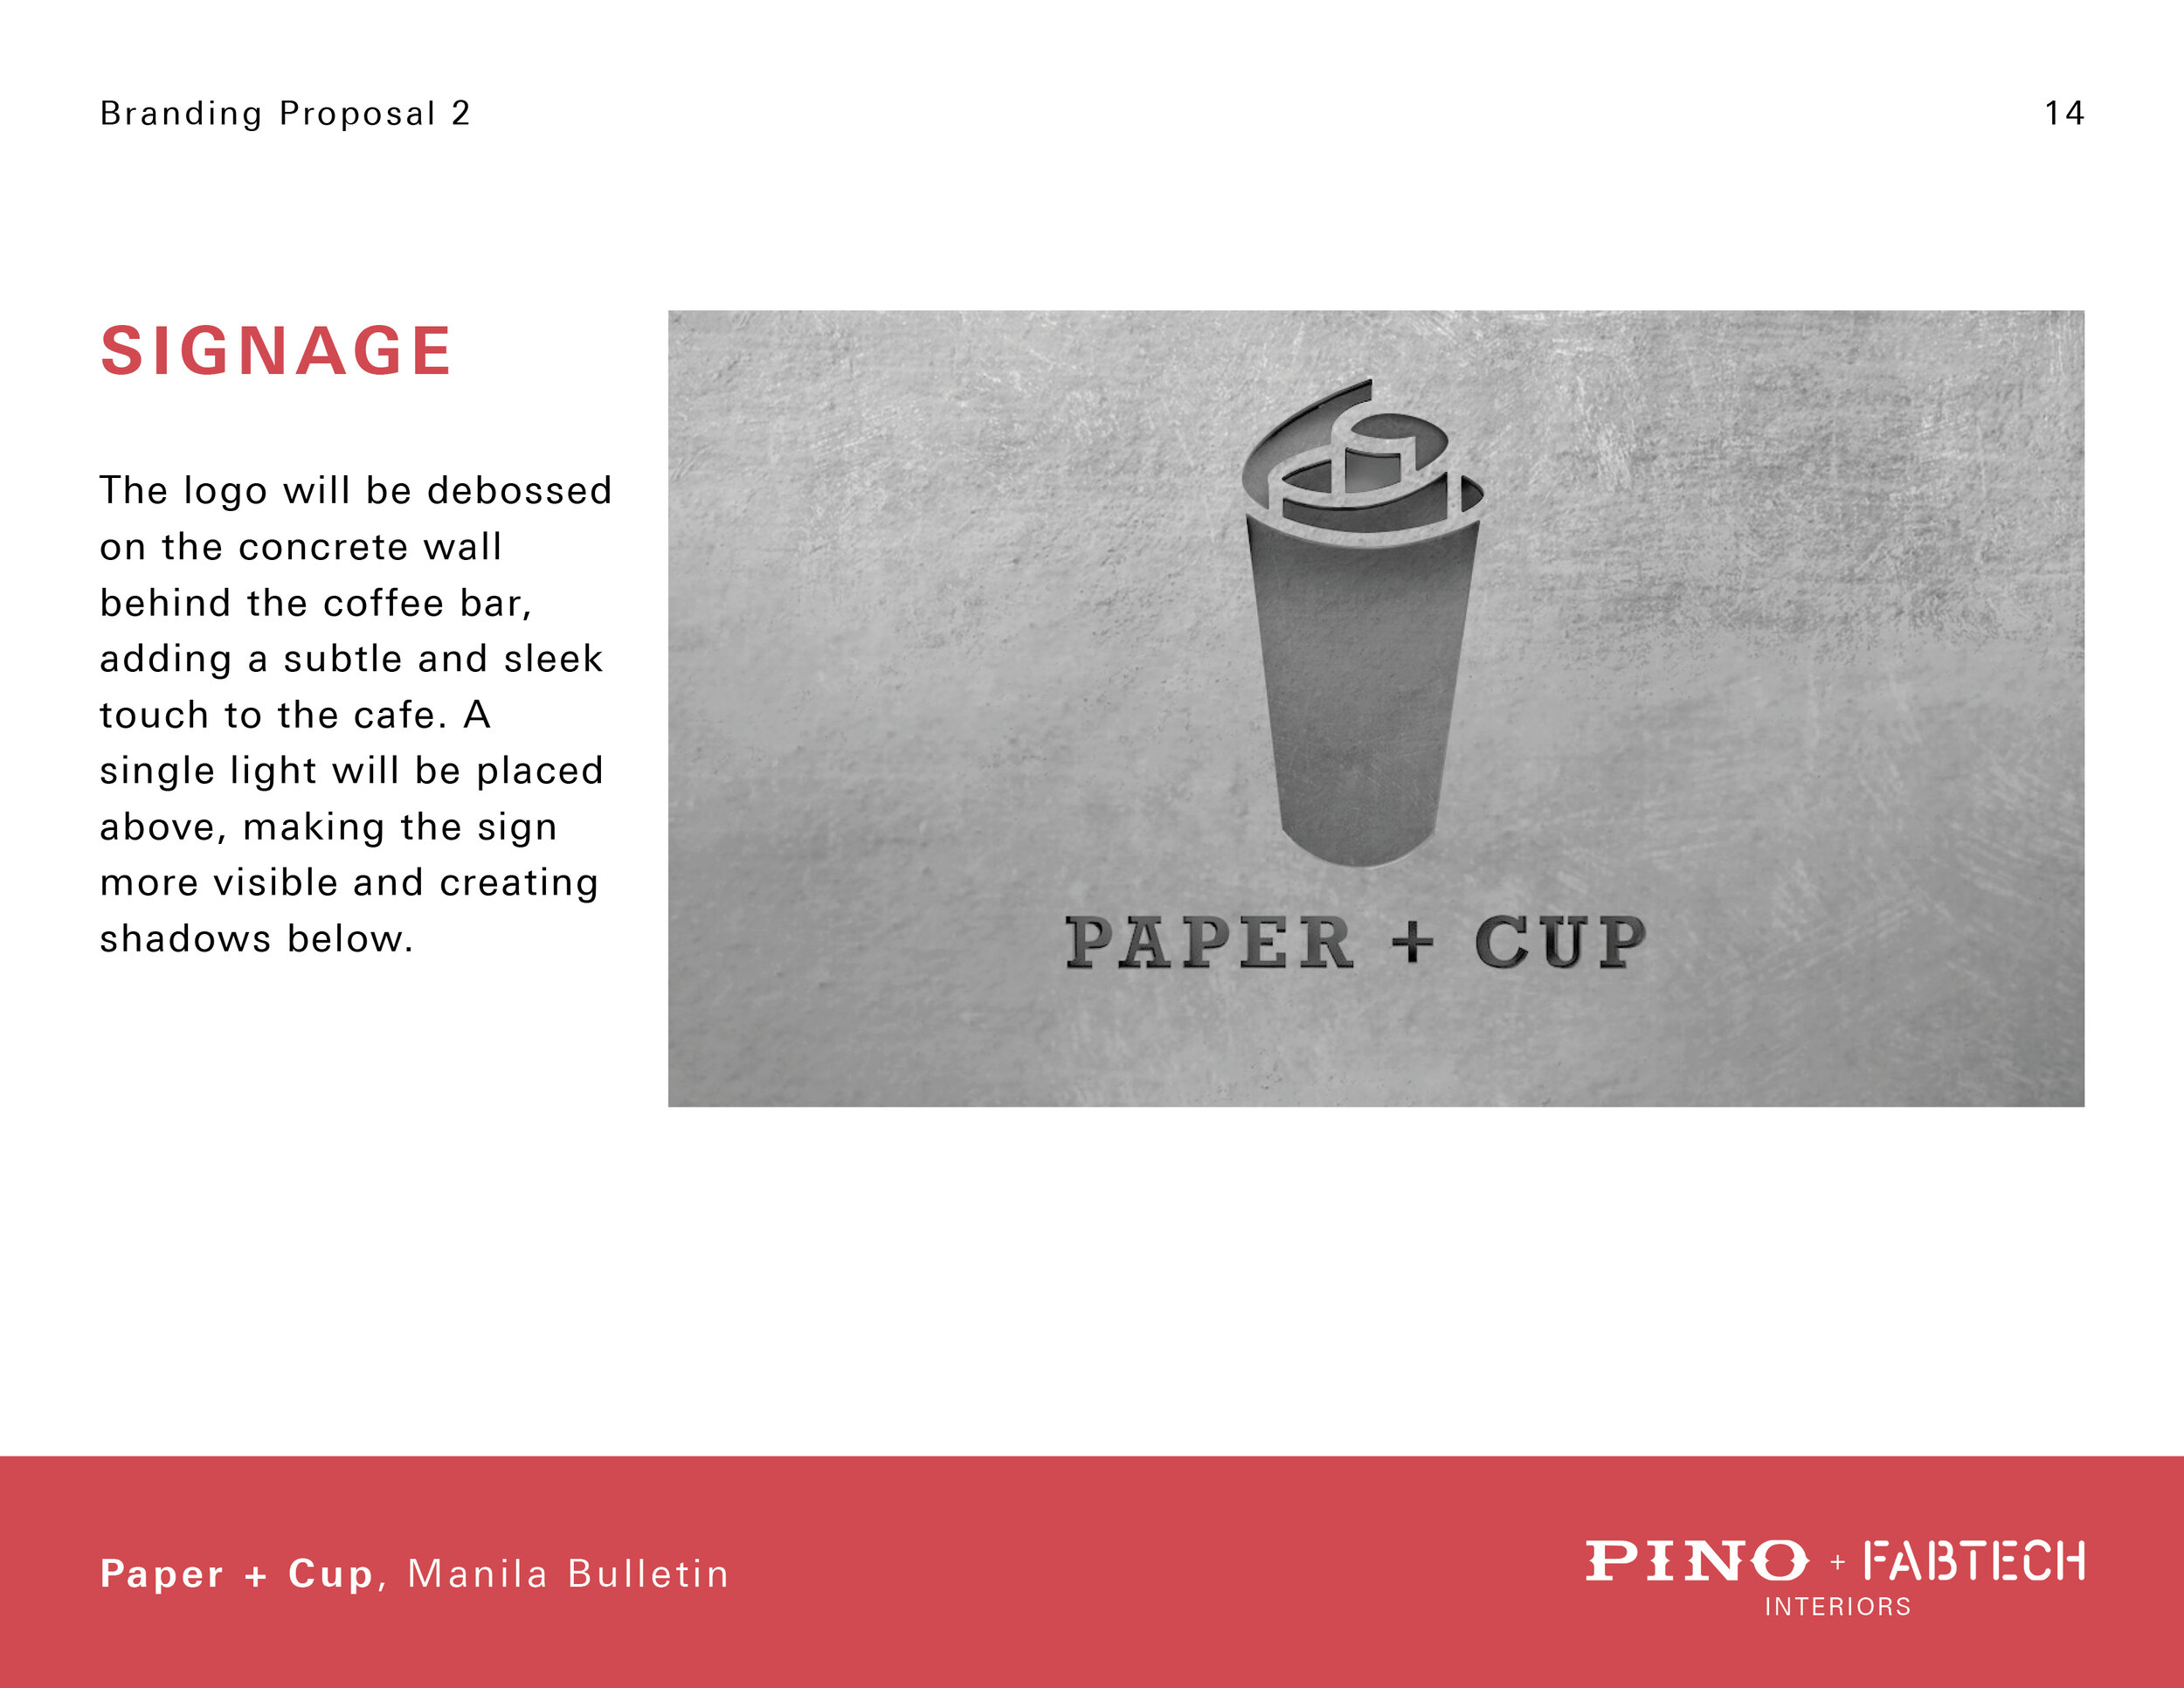 191010_Paper+Cups14.jpg